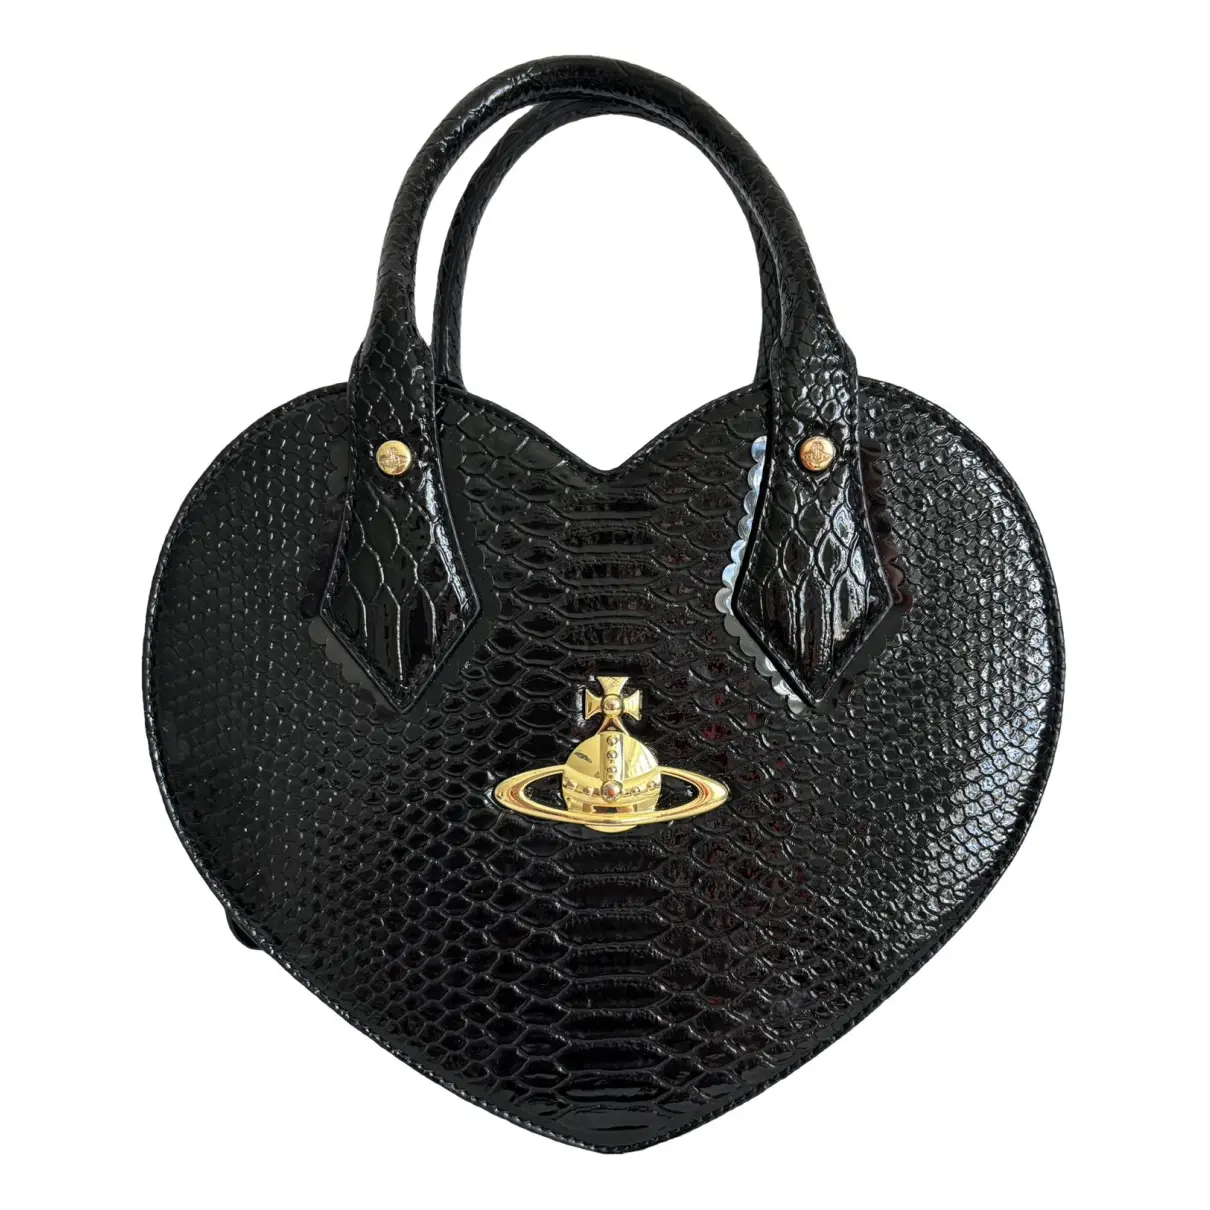 Chancery Heart vegan leather handbag